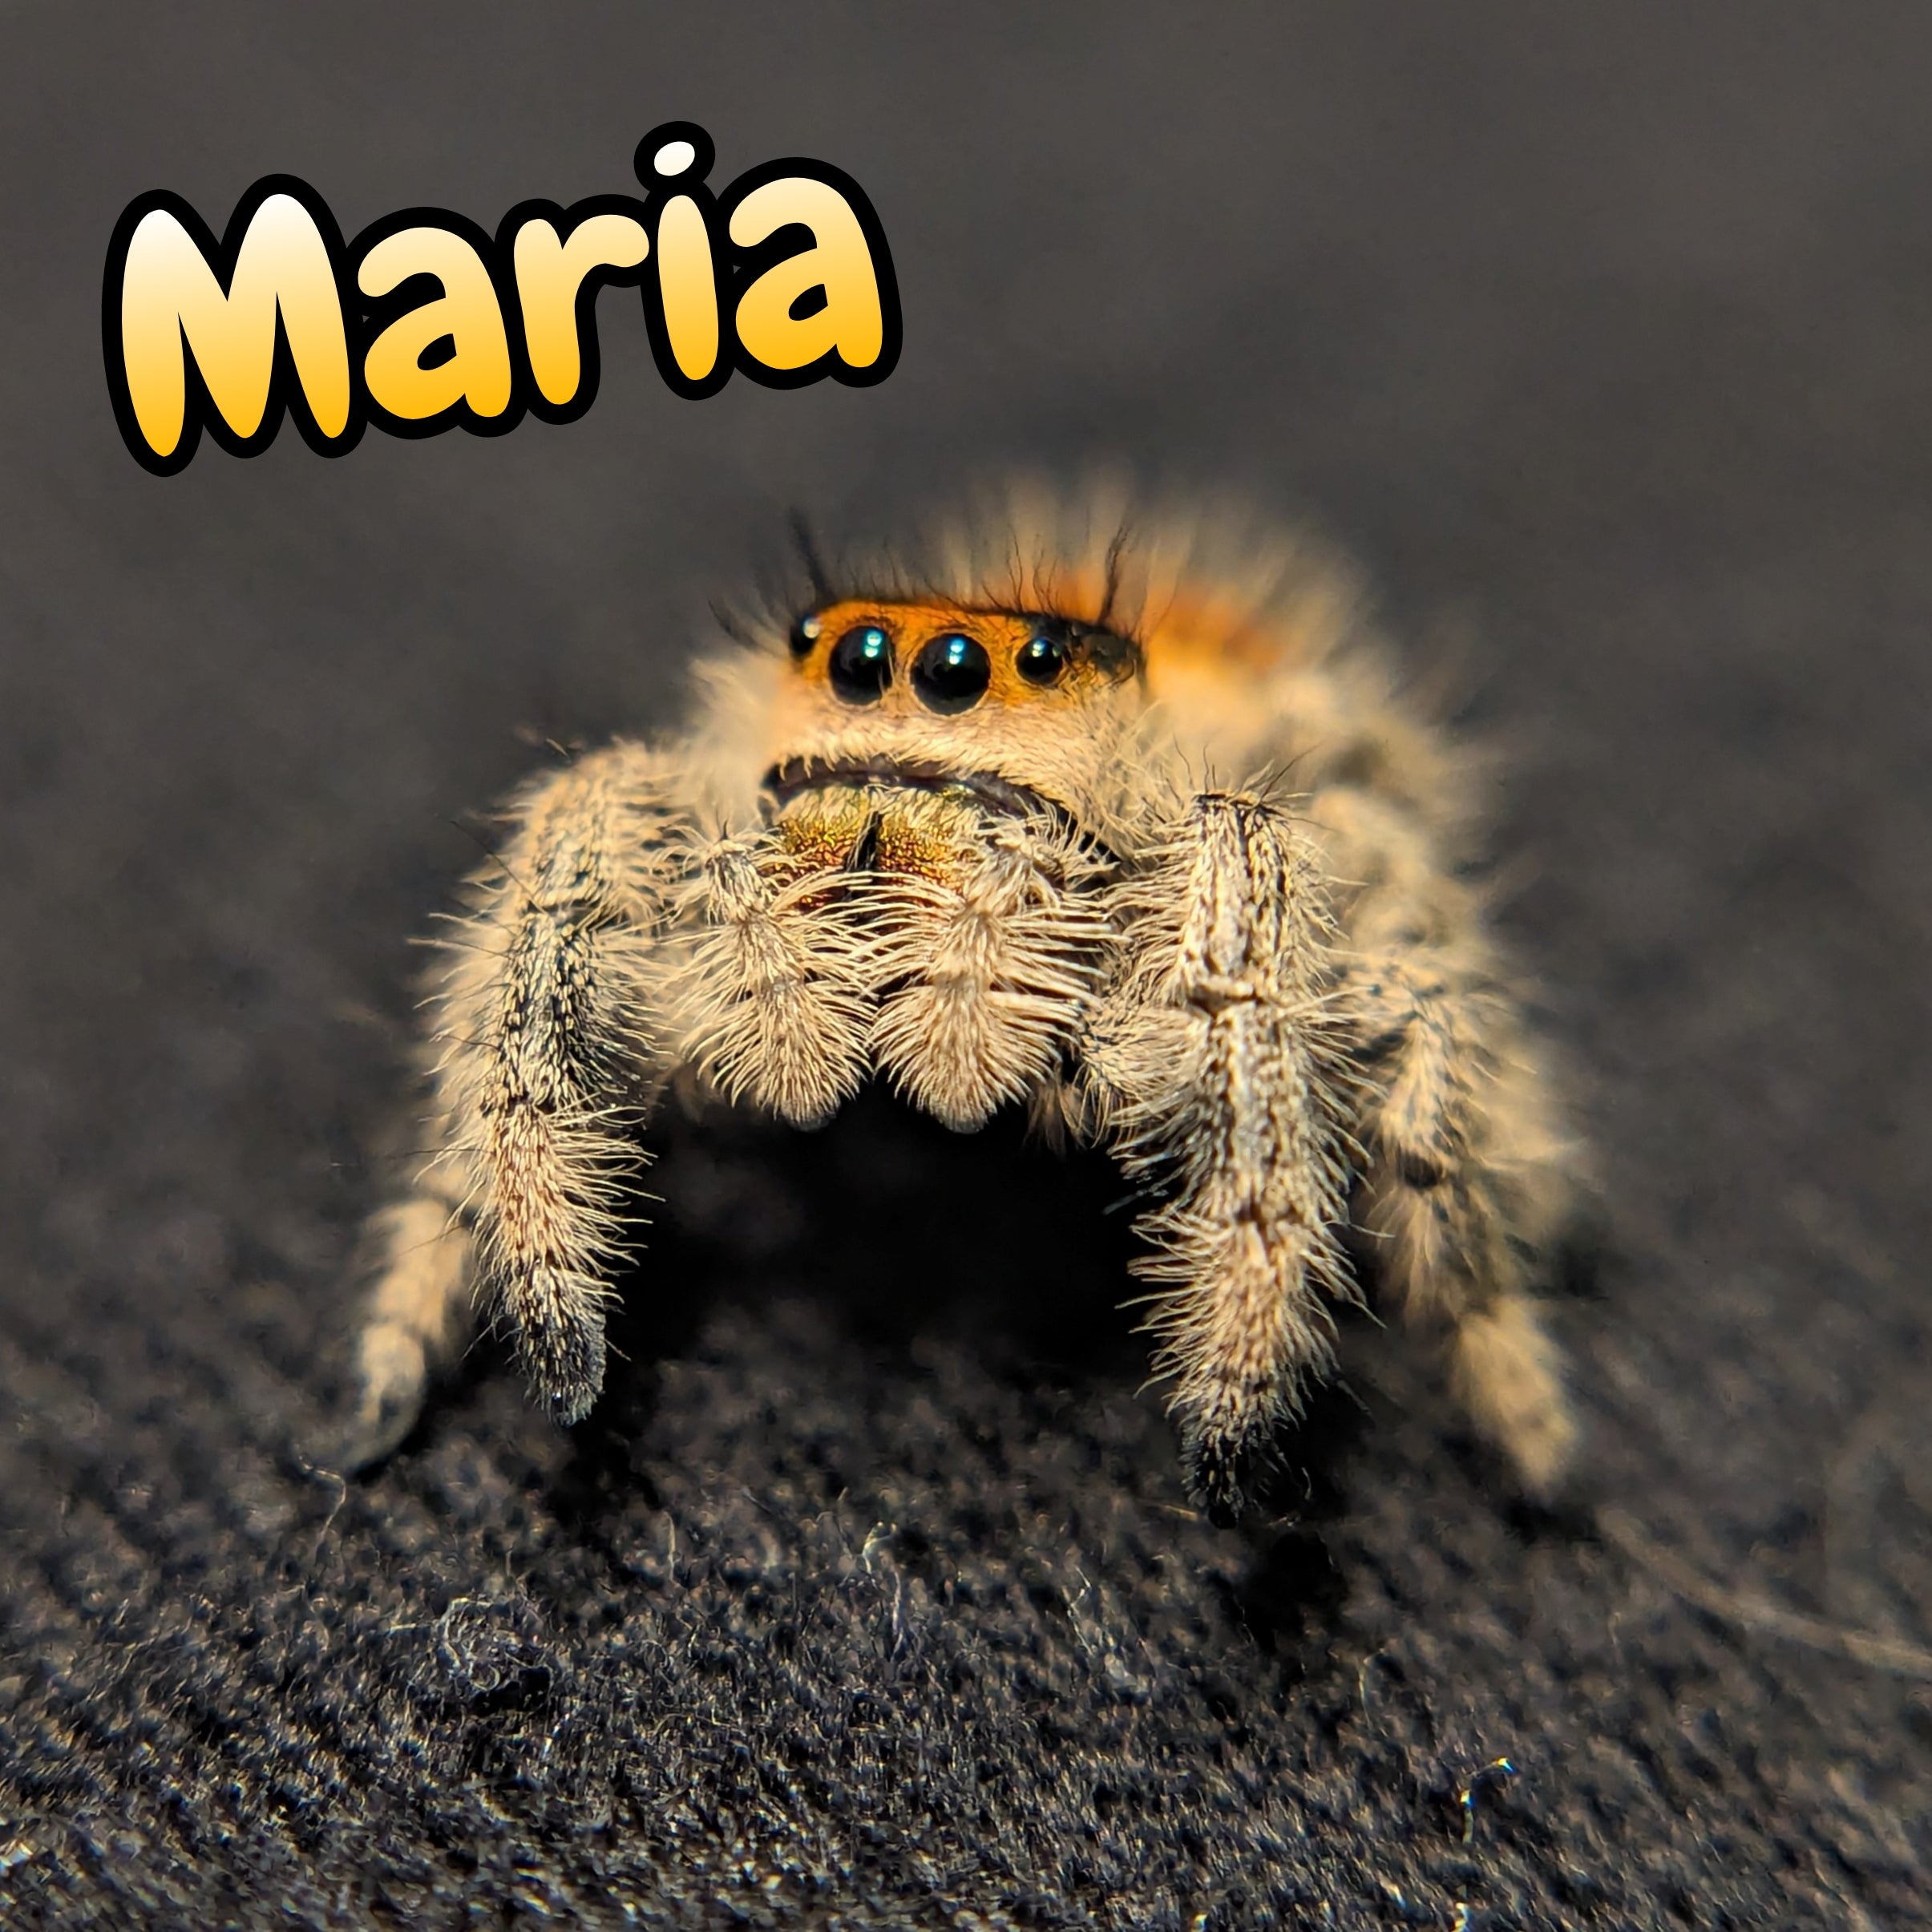 Regal Jumping Spider "Maria"